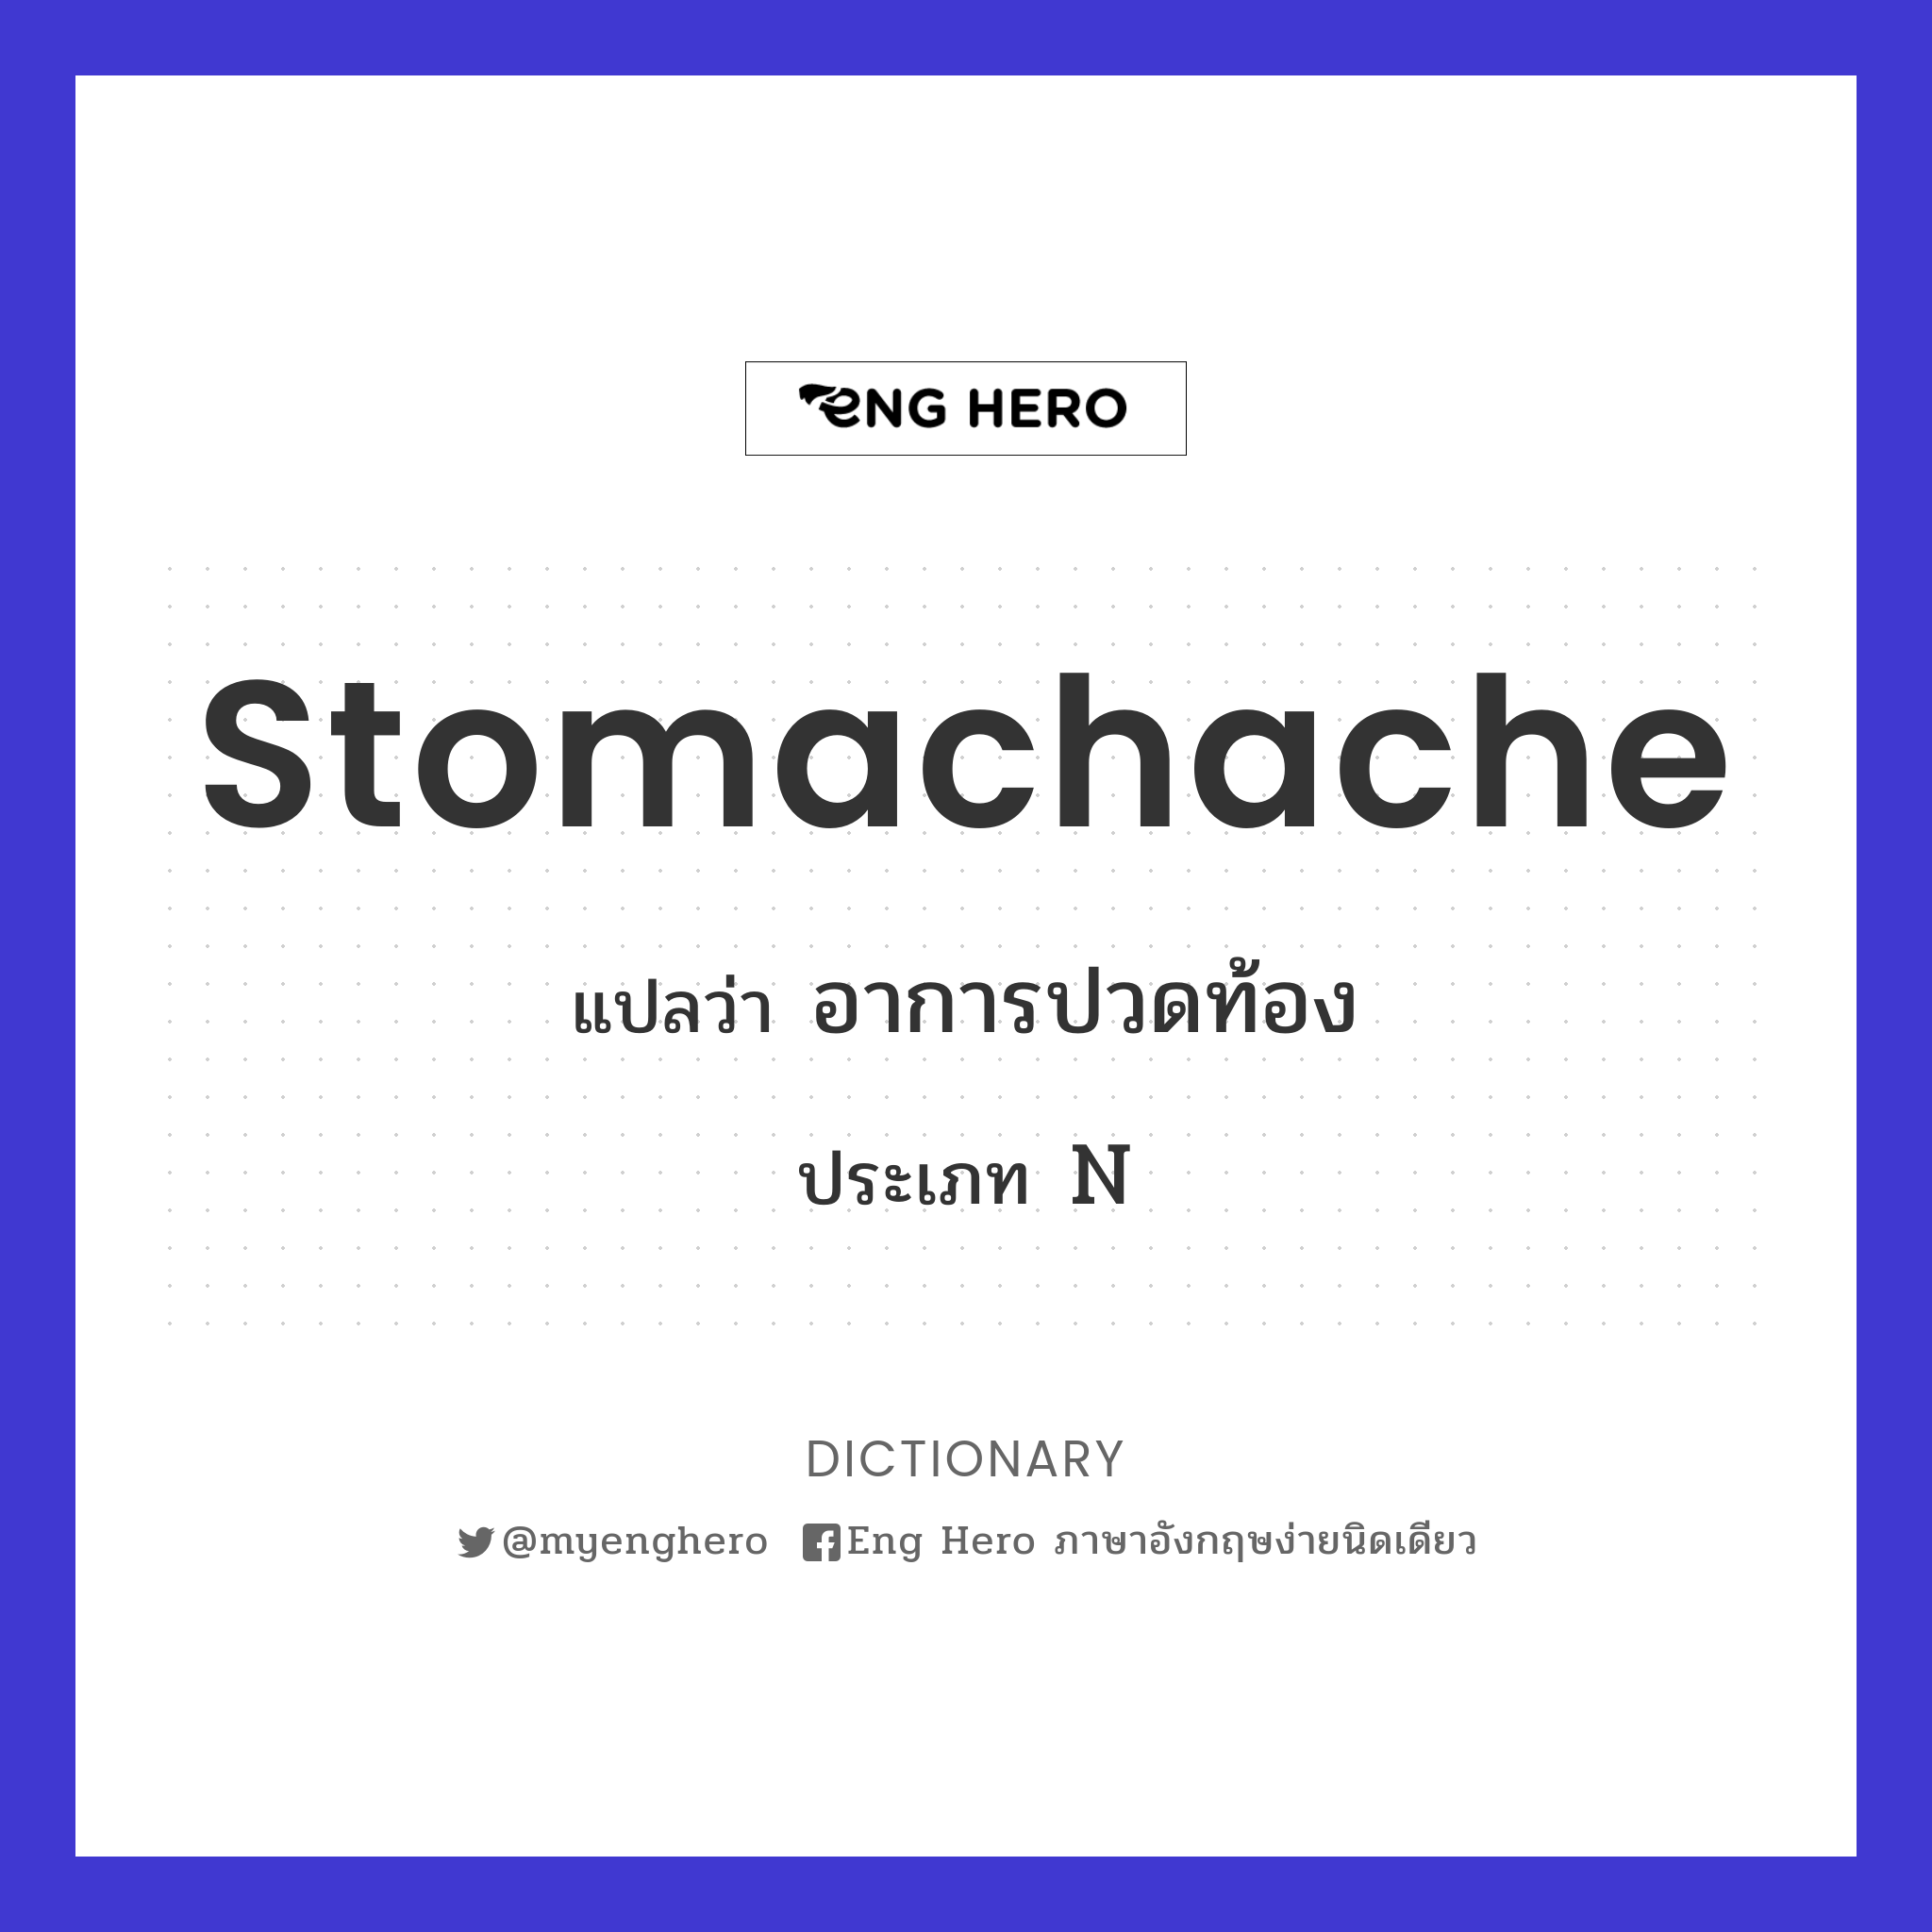 stomachache